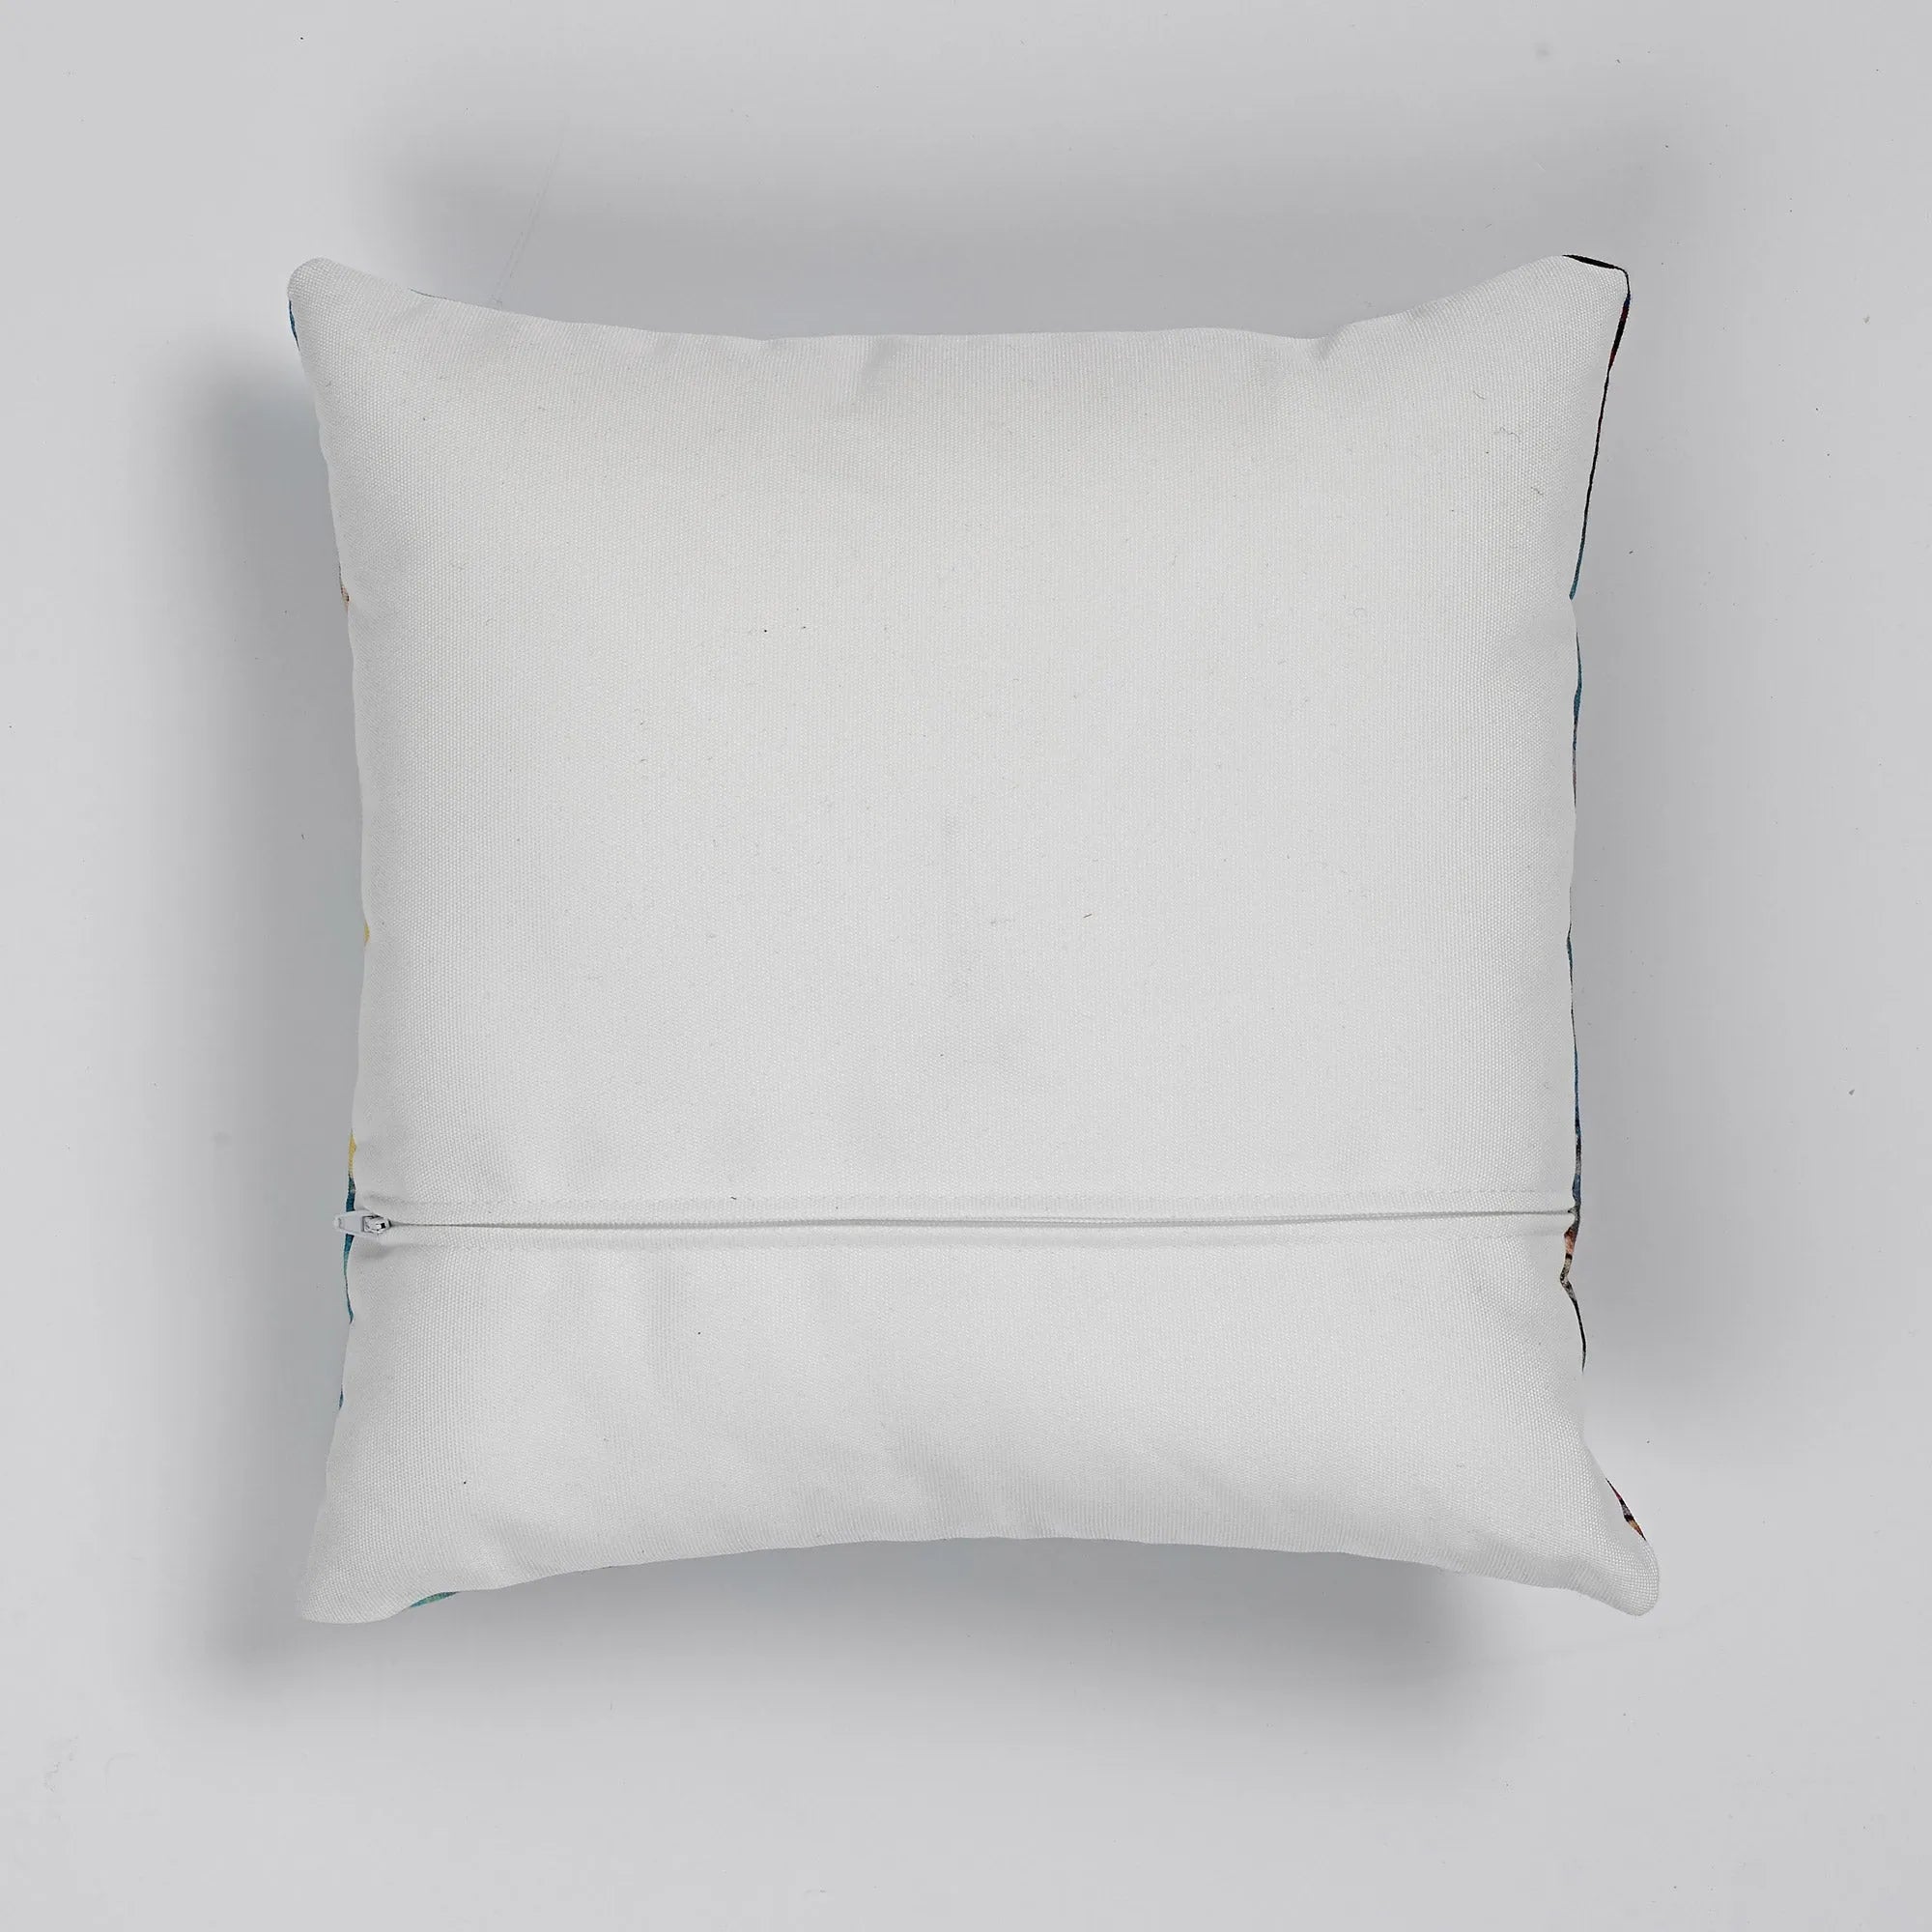 Chinese Master Cushion - Throw Pillows - Aesthetic Art